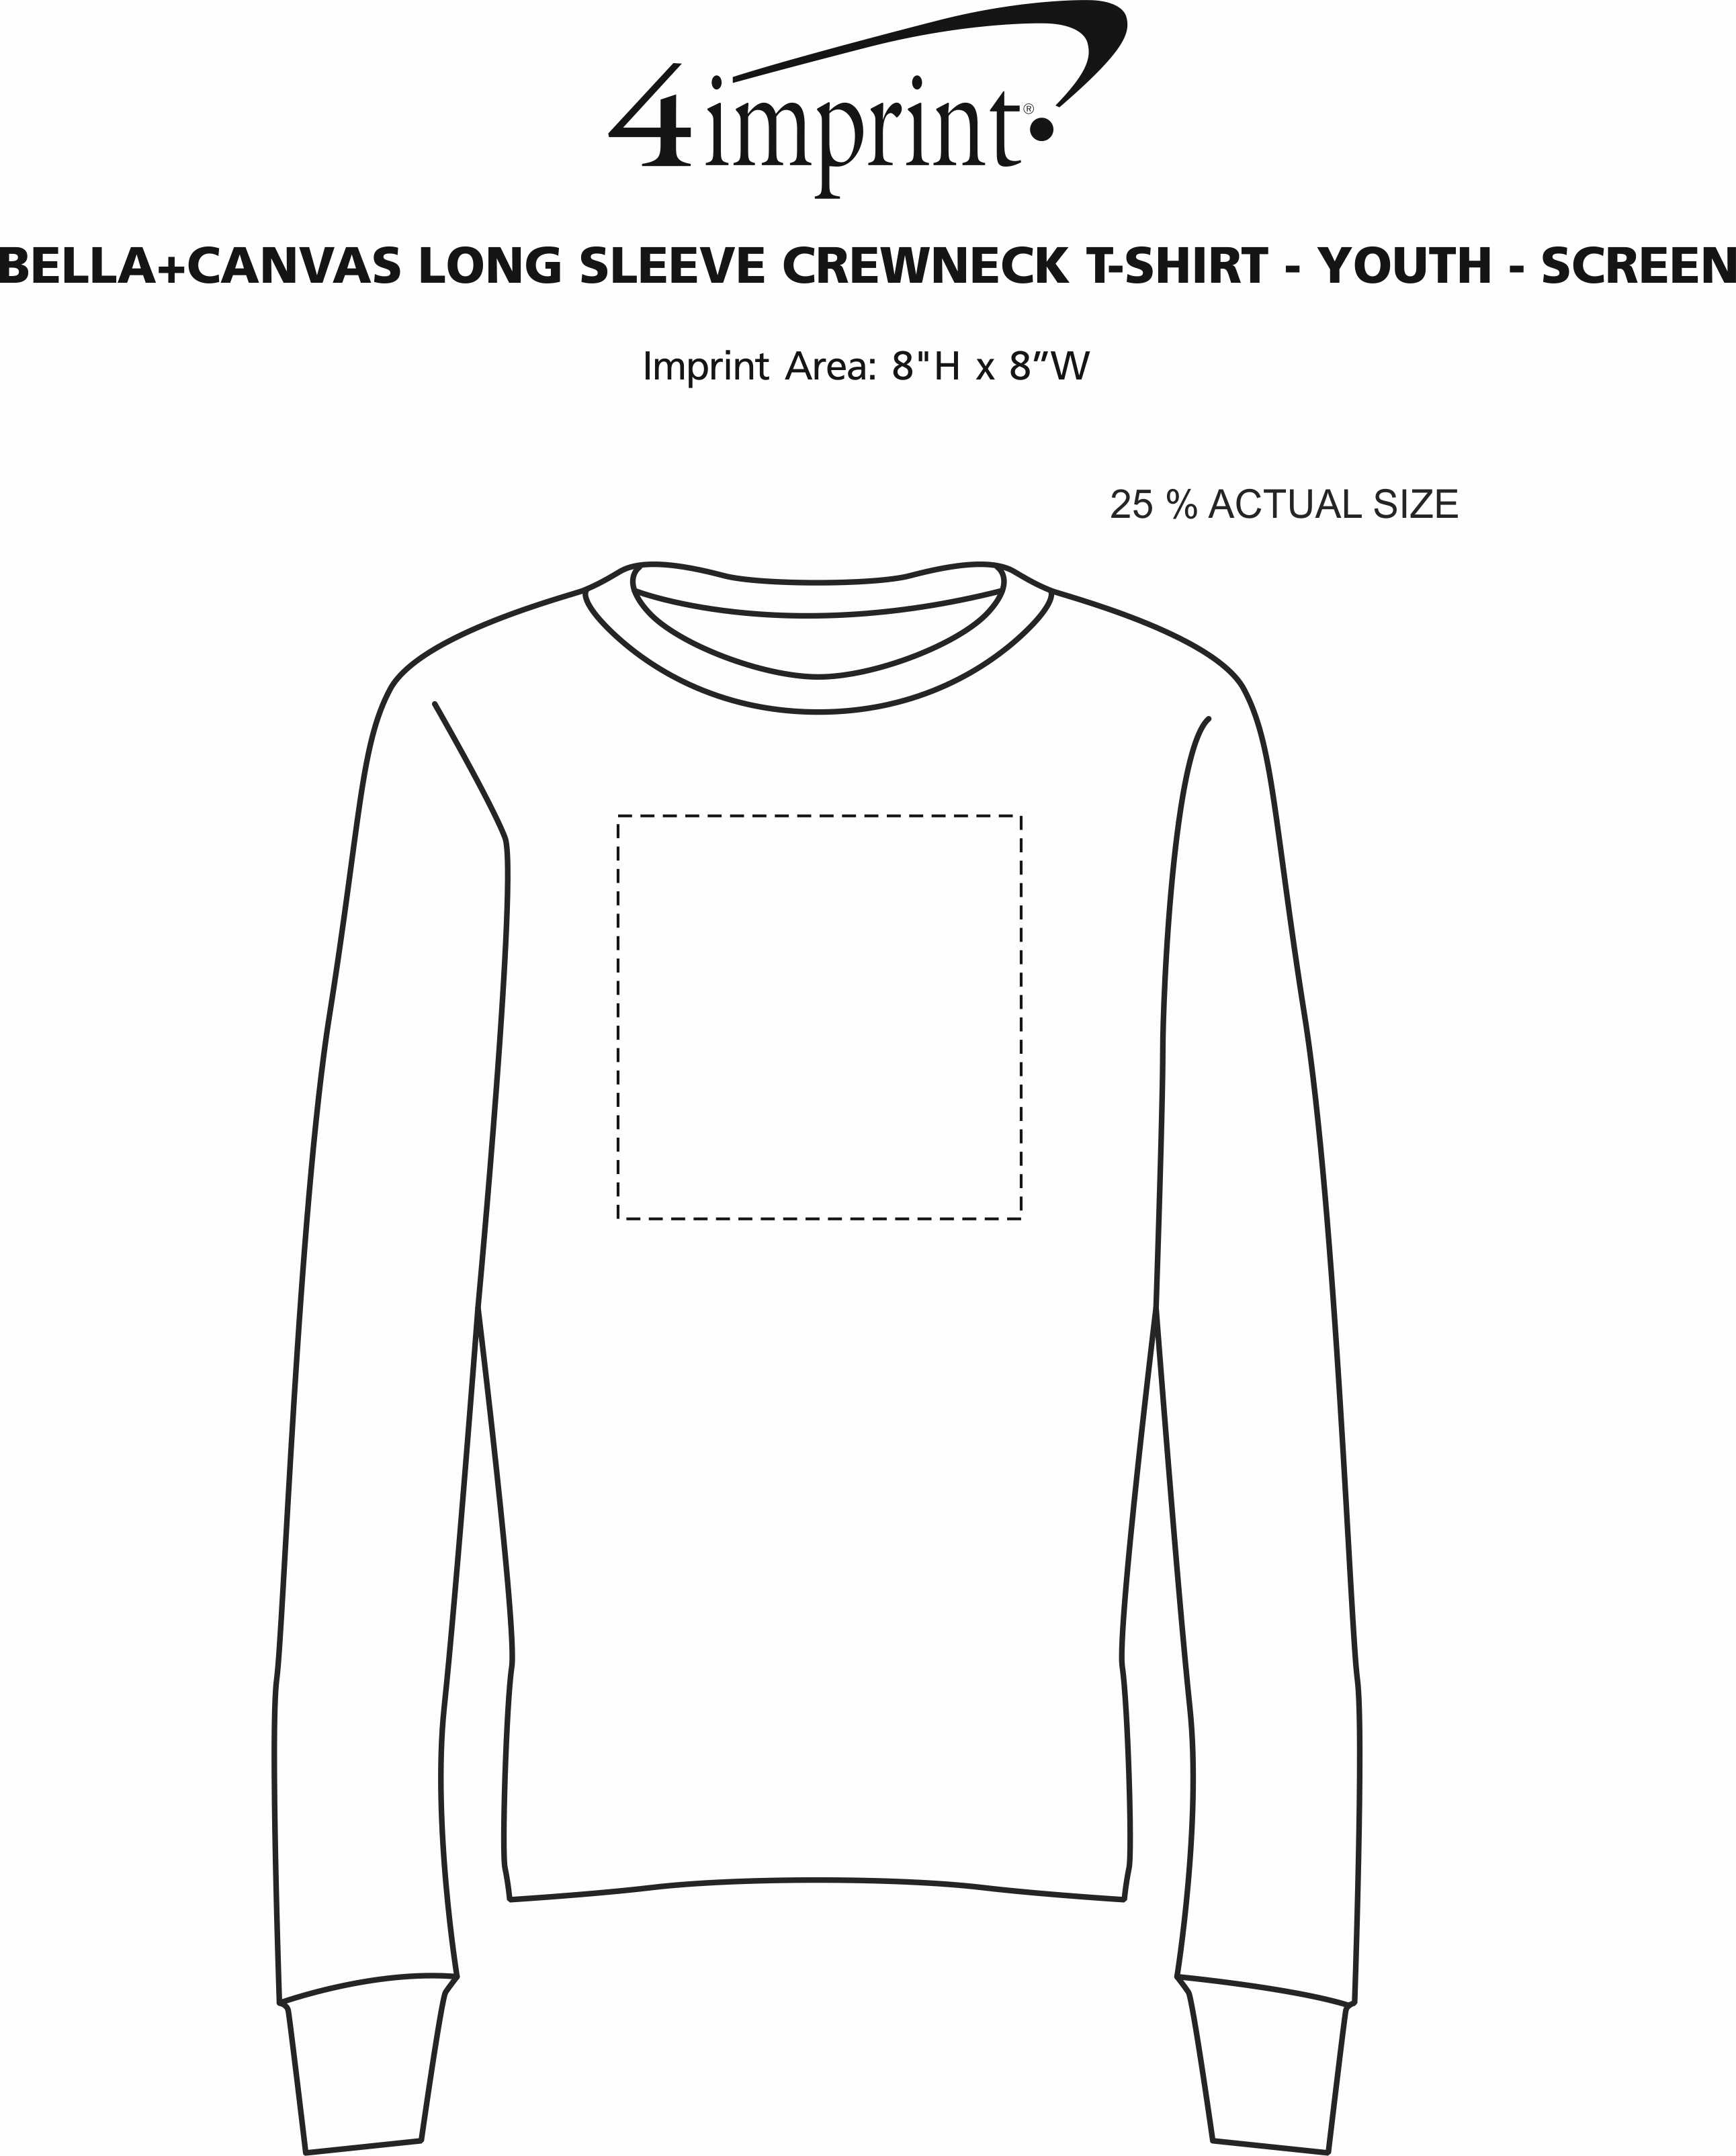 Imprint Area of Bella+Canvas Long Sleeve Crewneck T-Shirt - Youth - Screen